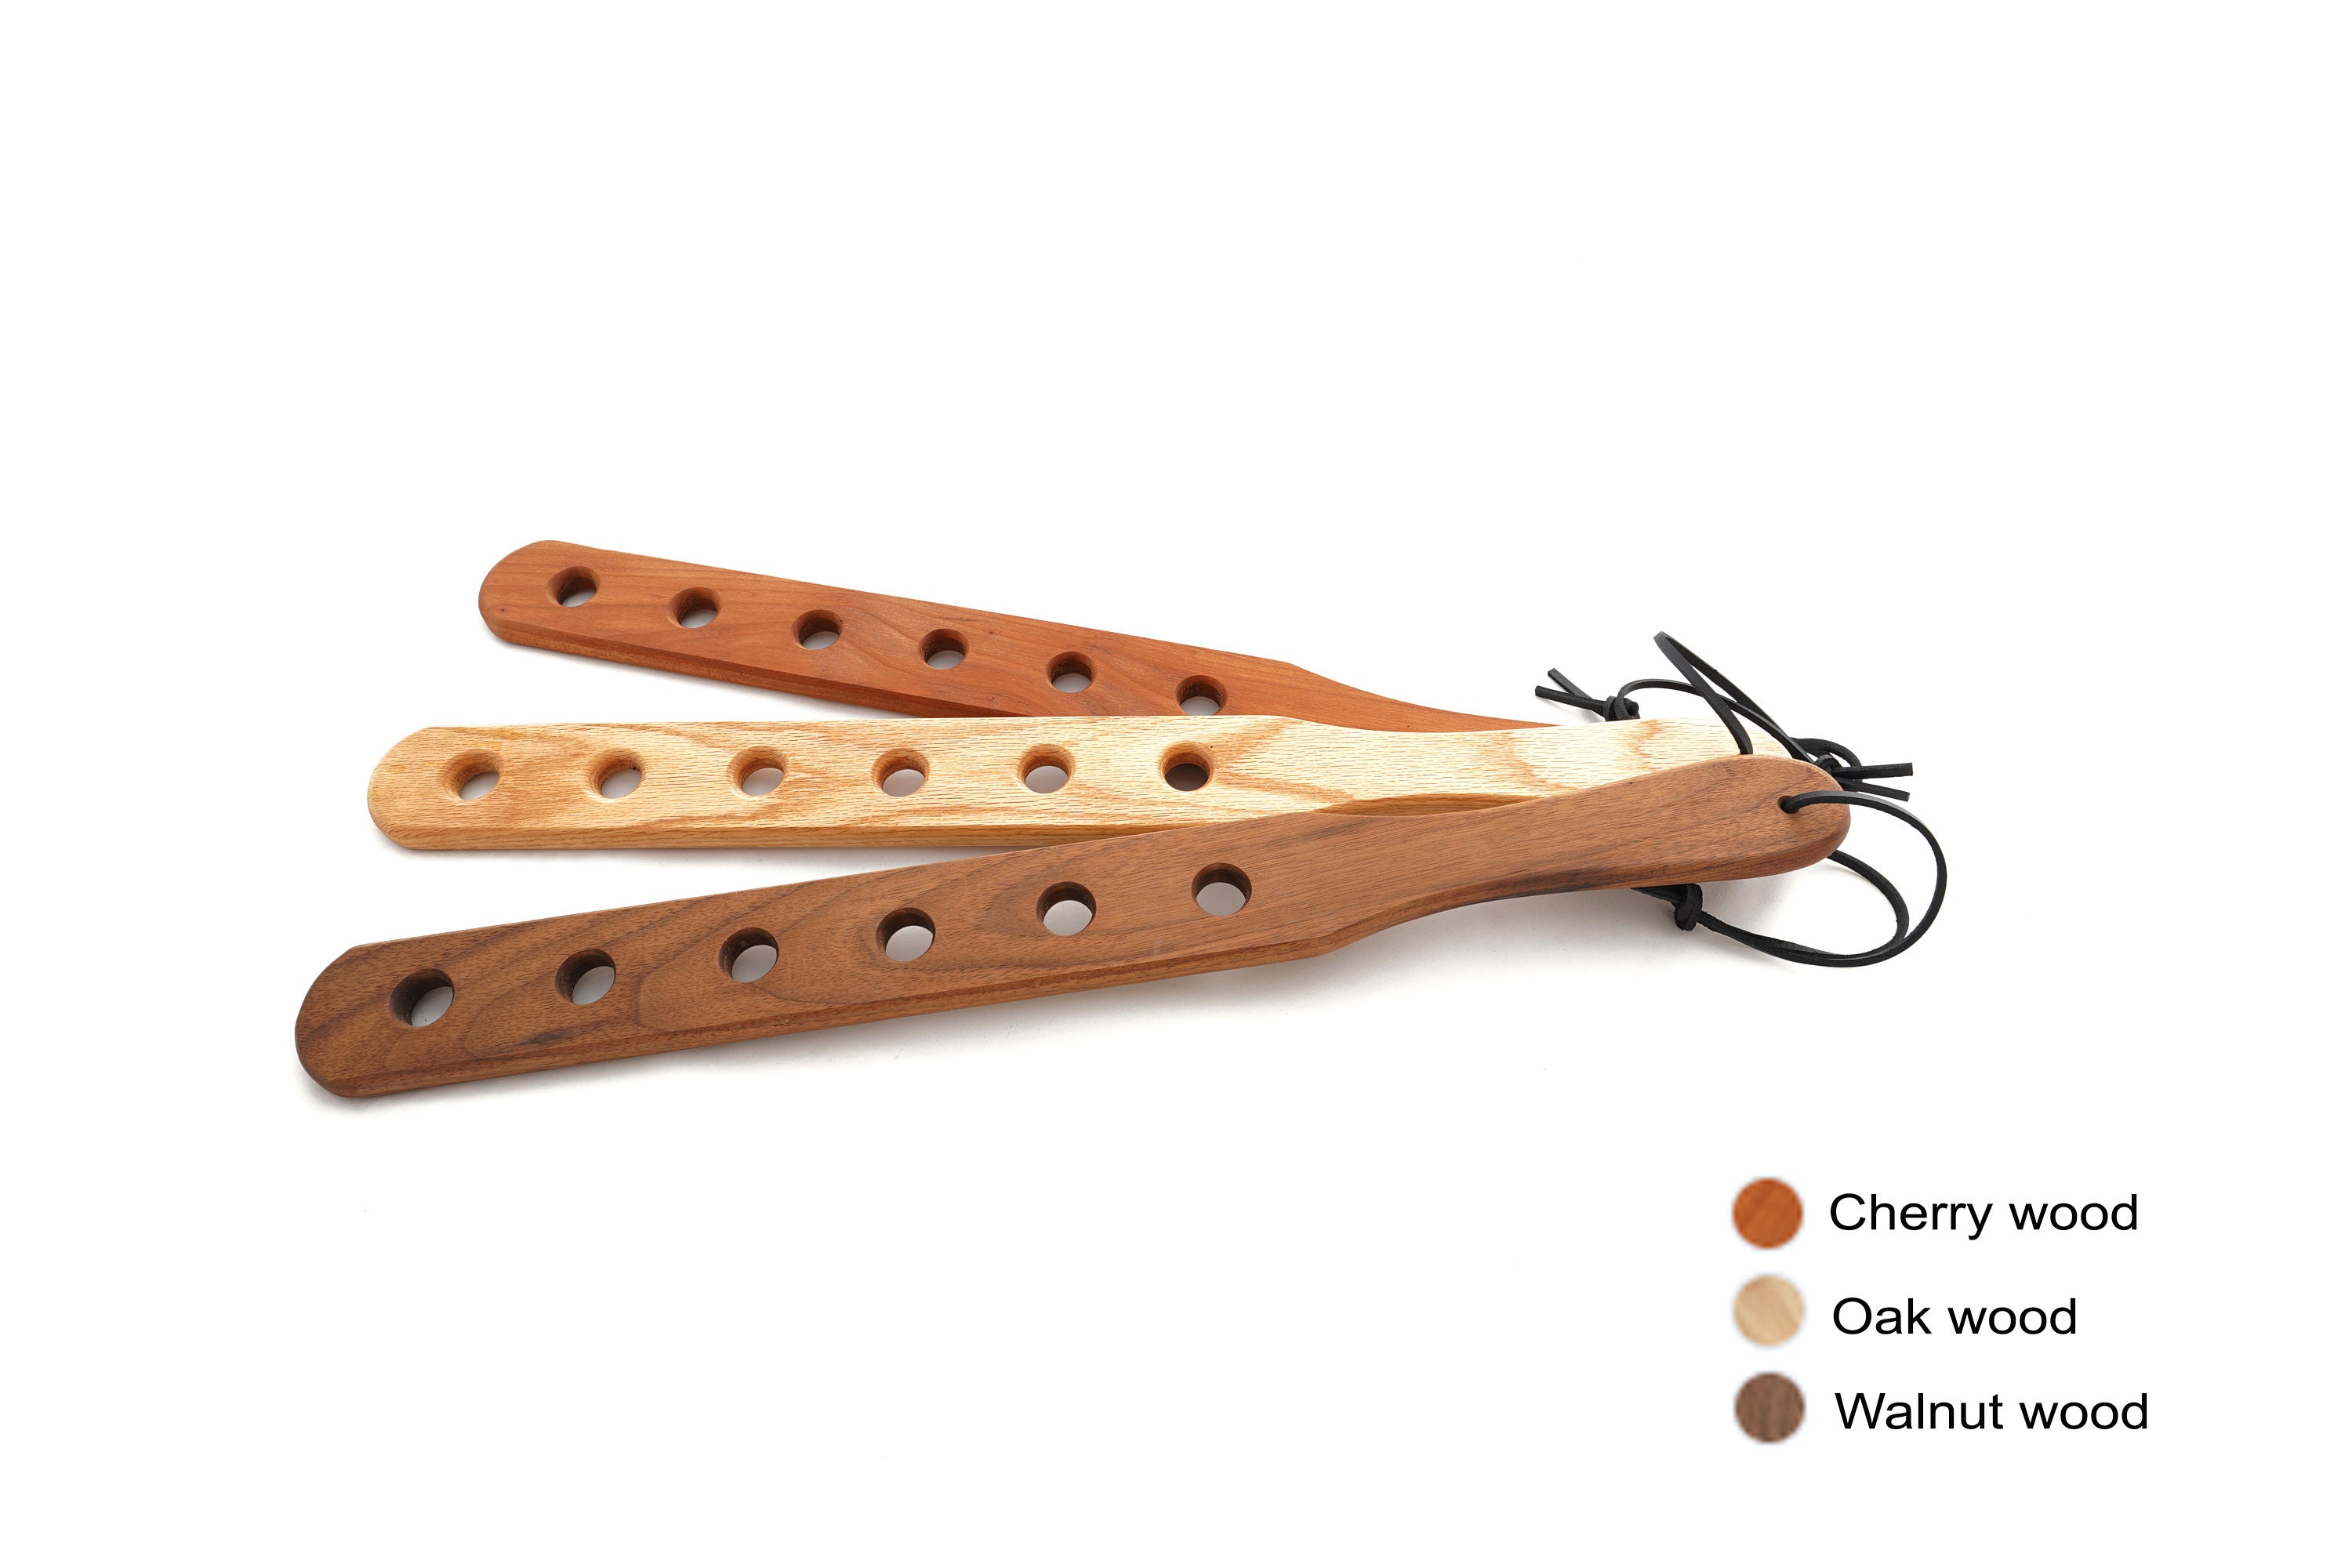 Spanking Paddle 14 with Holes, Wood Spanking 14 Paddle with Holes –  PleasureFactorys